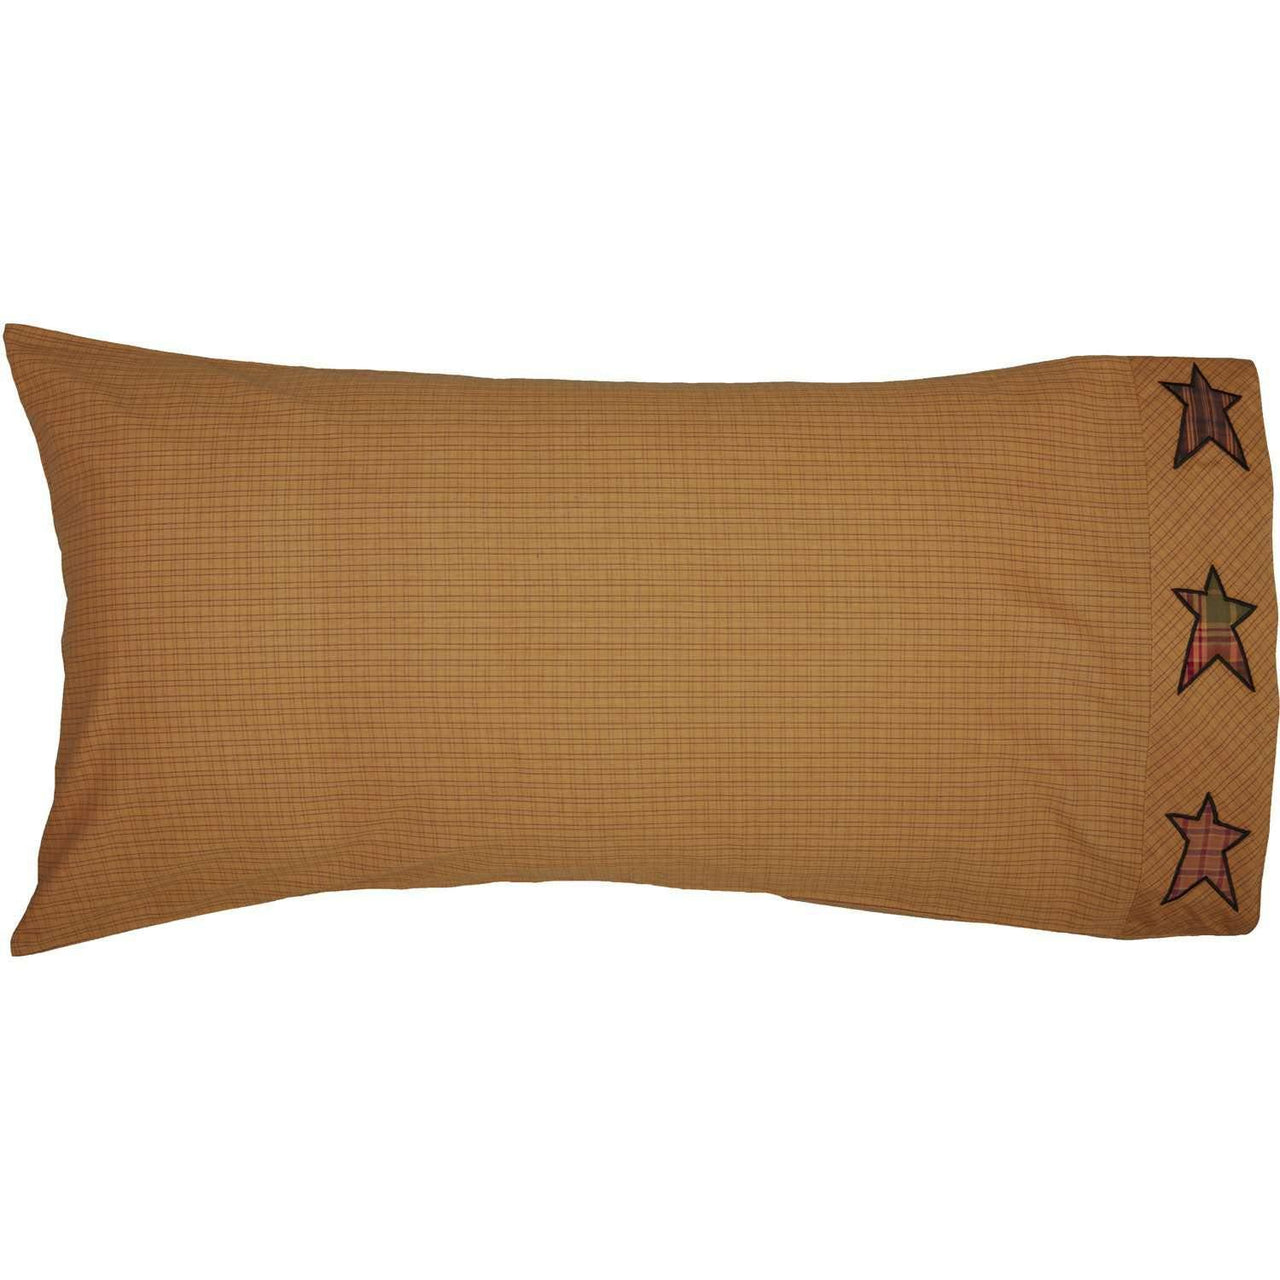 Stratton King Pillow Case w/Applique Star Set of 2 21x40 VHC Brands - The Fox Decor